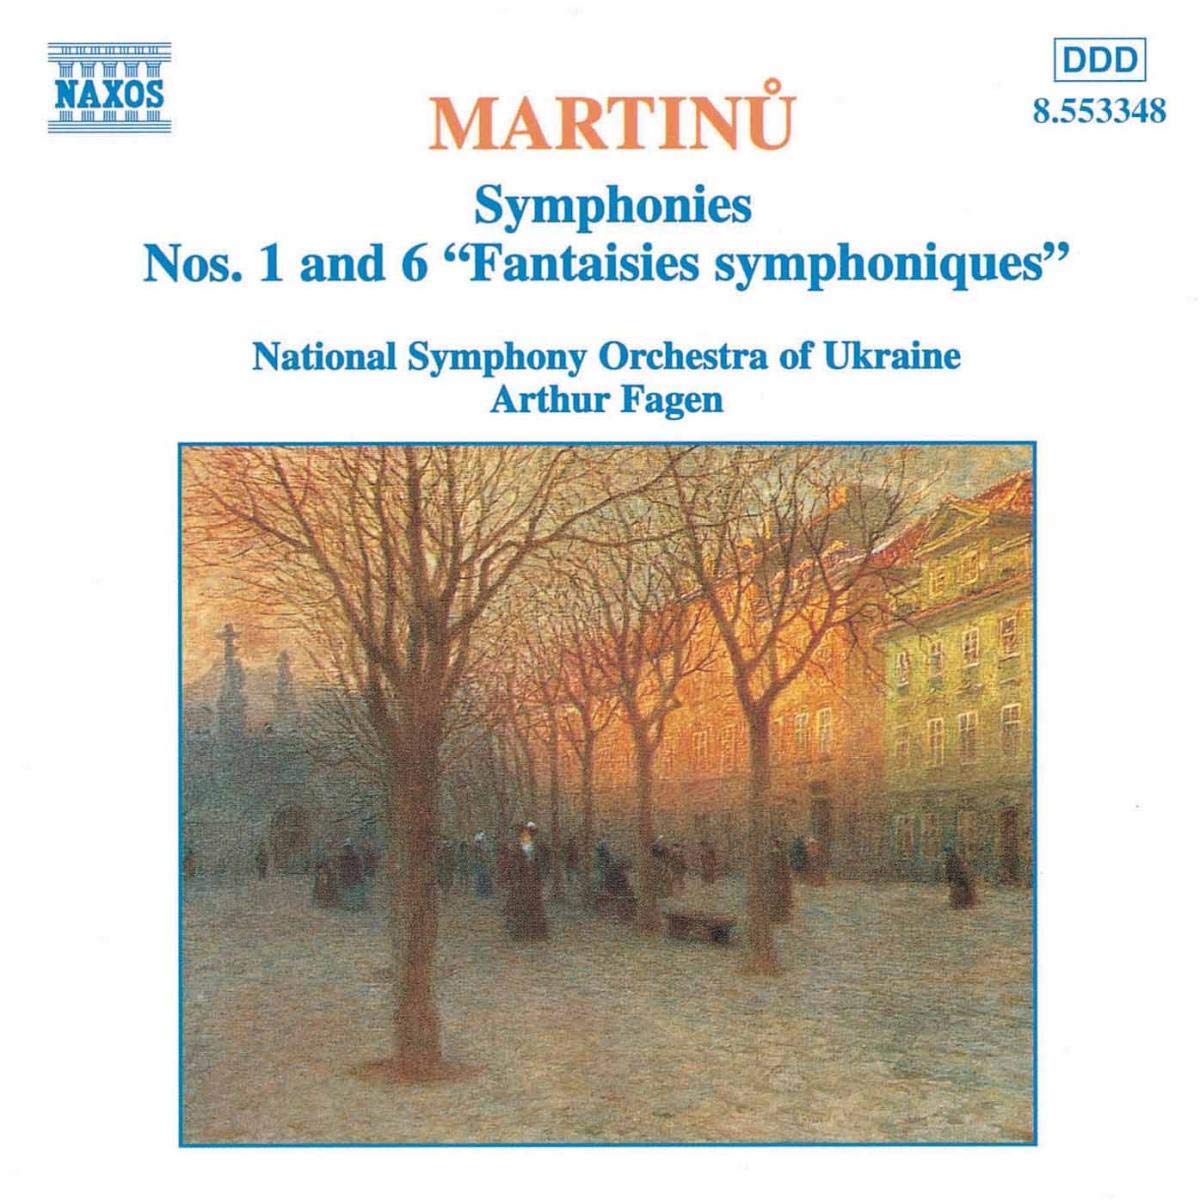 MARTINU: Symphonies nos. 1 & 6